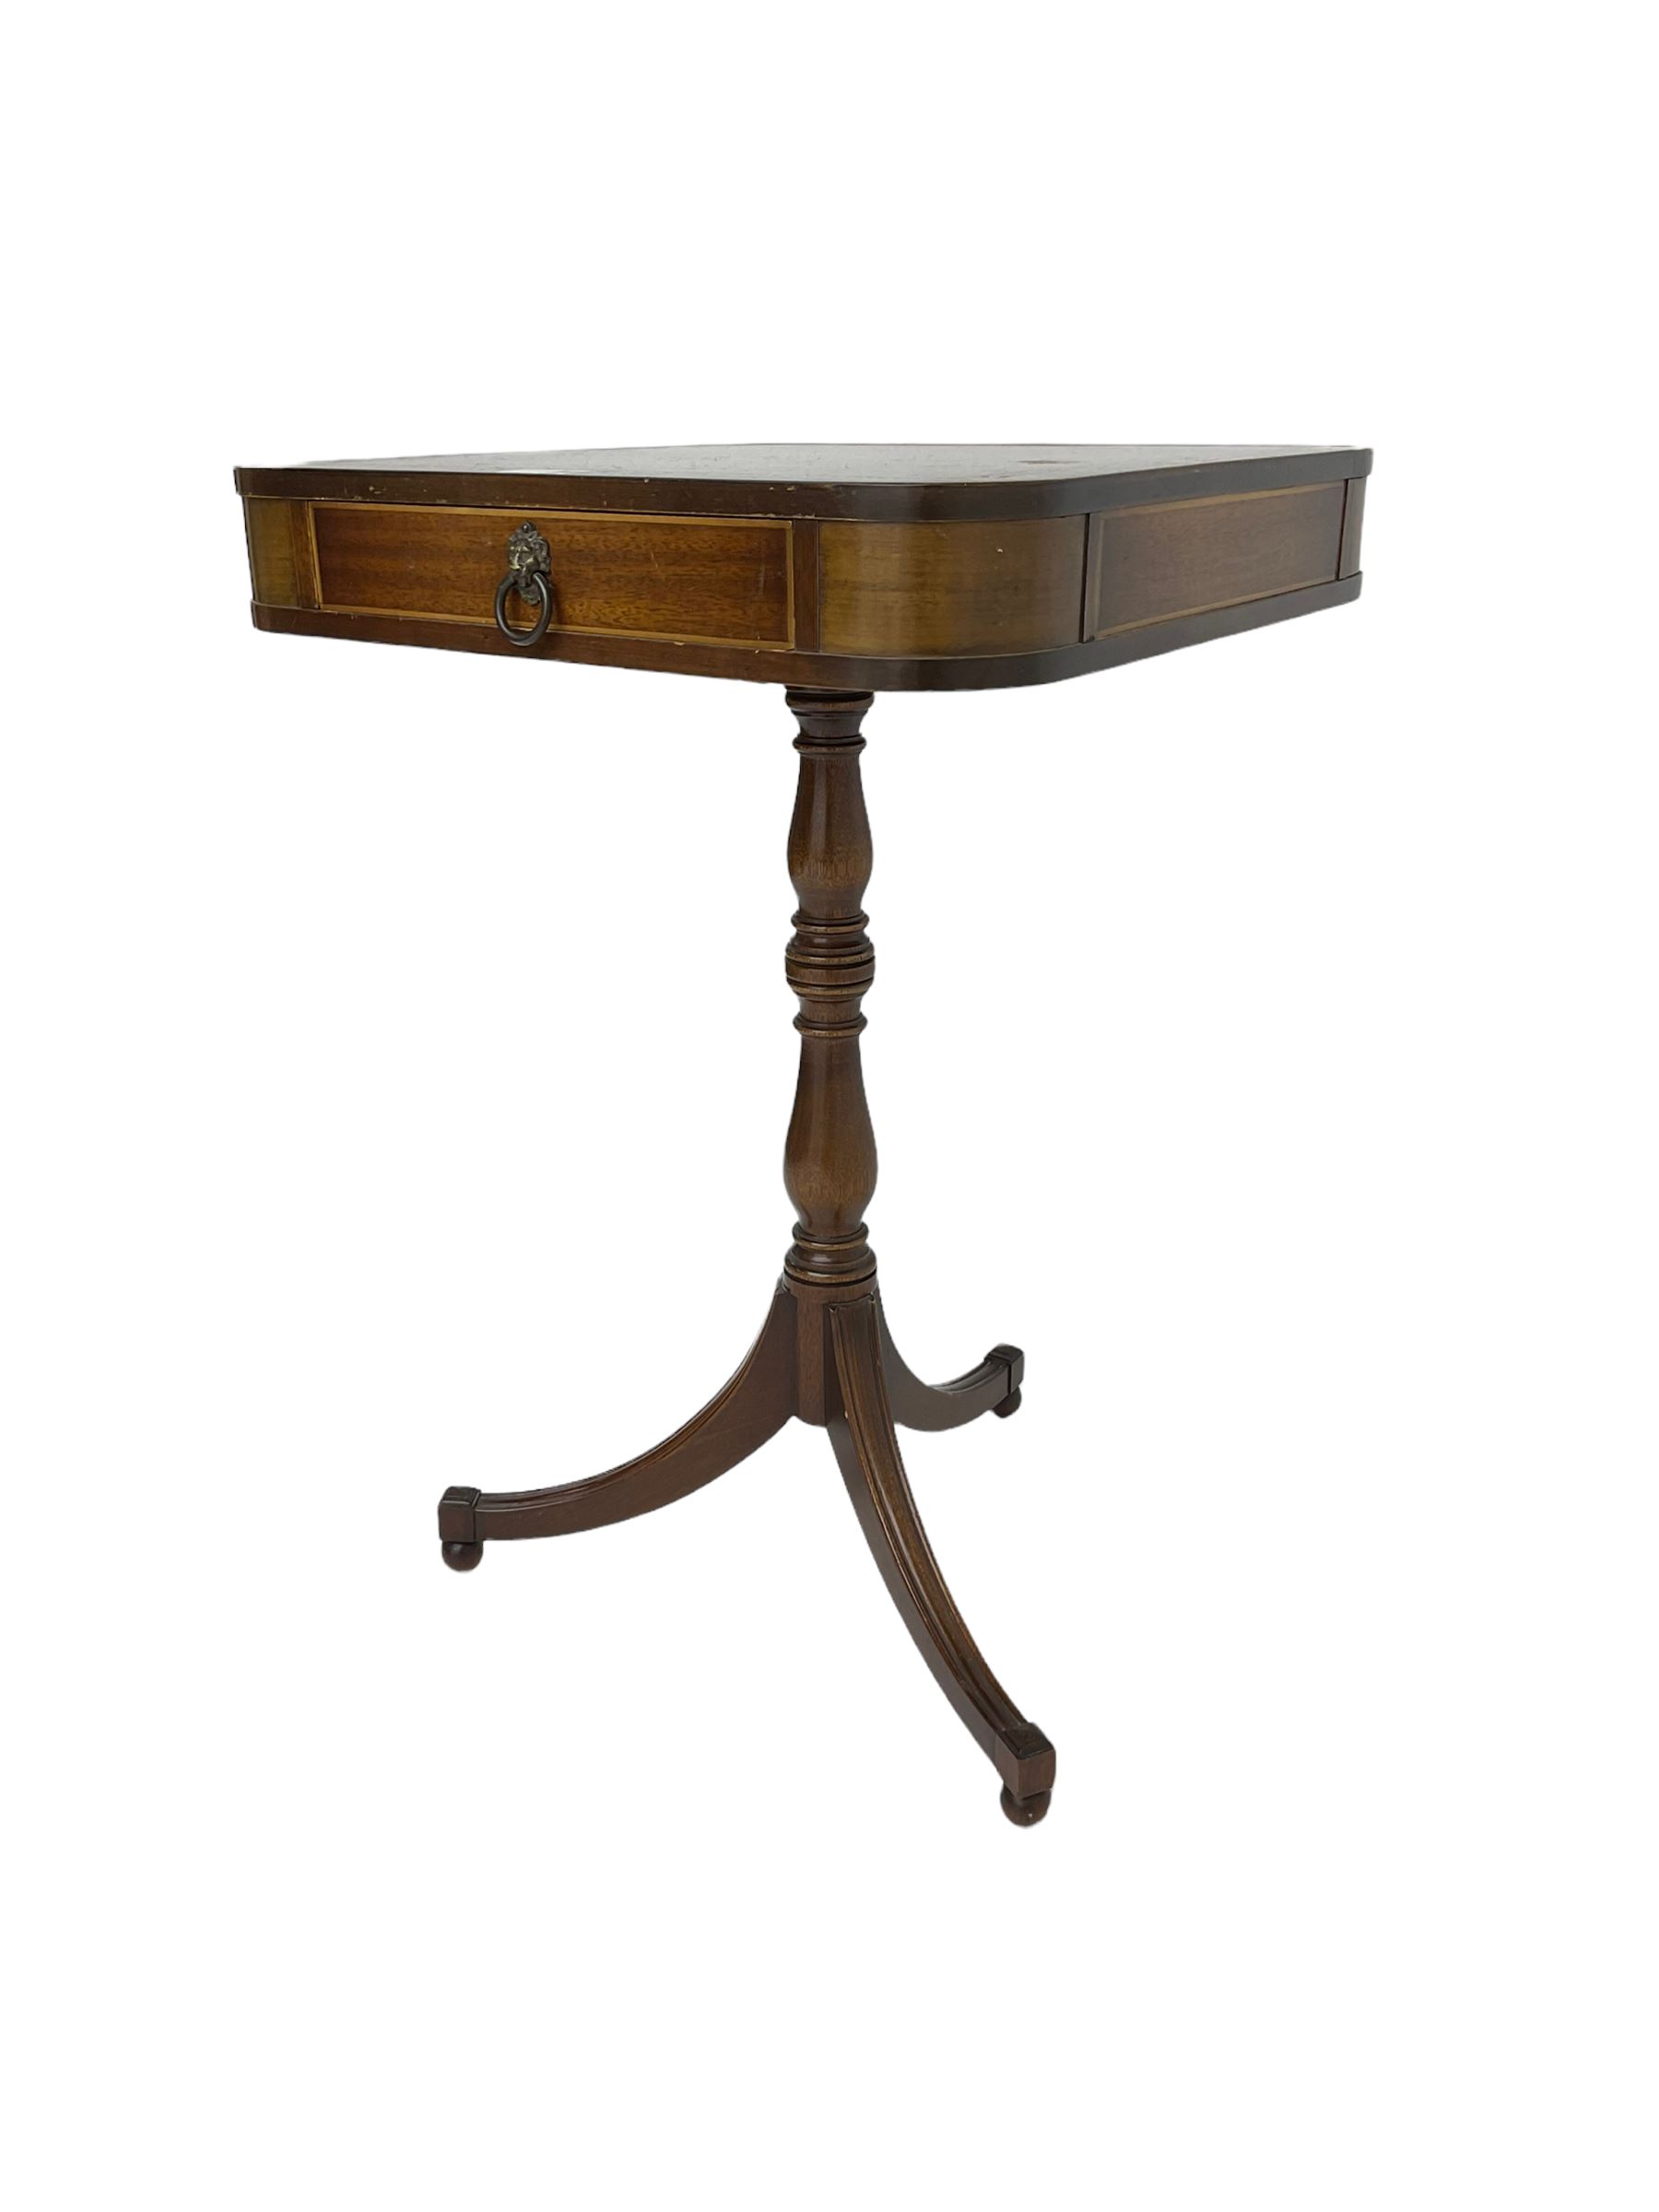 Regency style mahogany pedestal table - Image 4 of 7